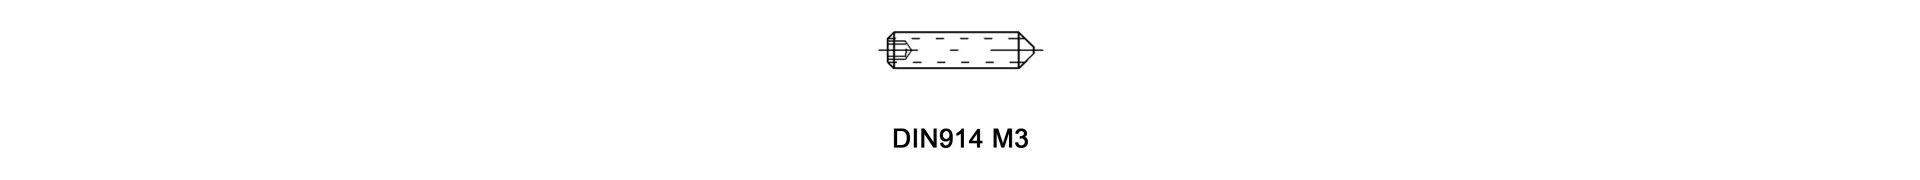 DIN914 M3